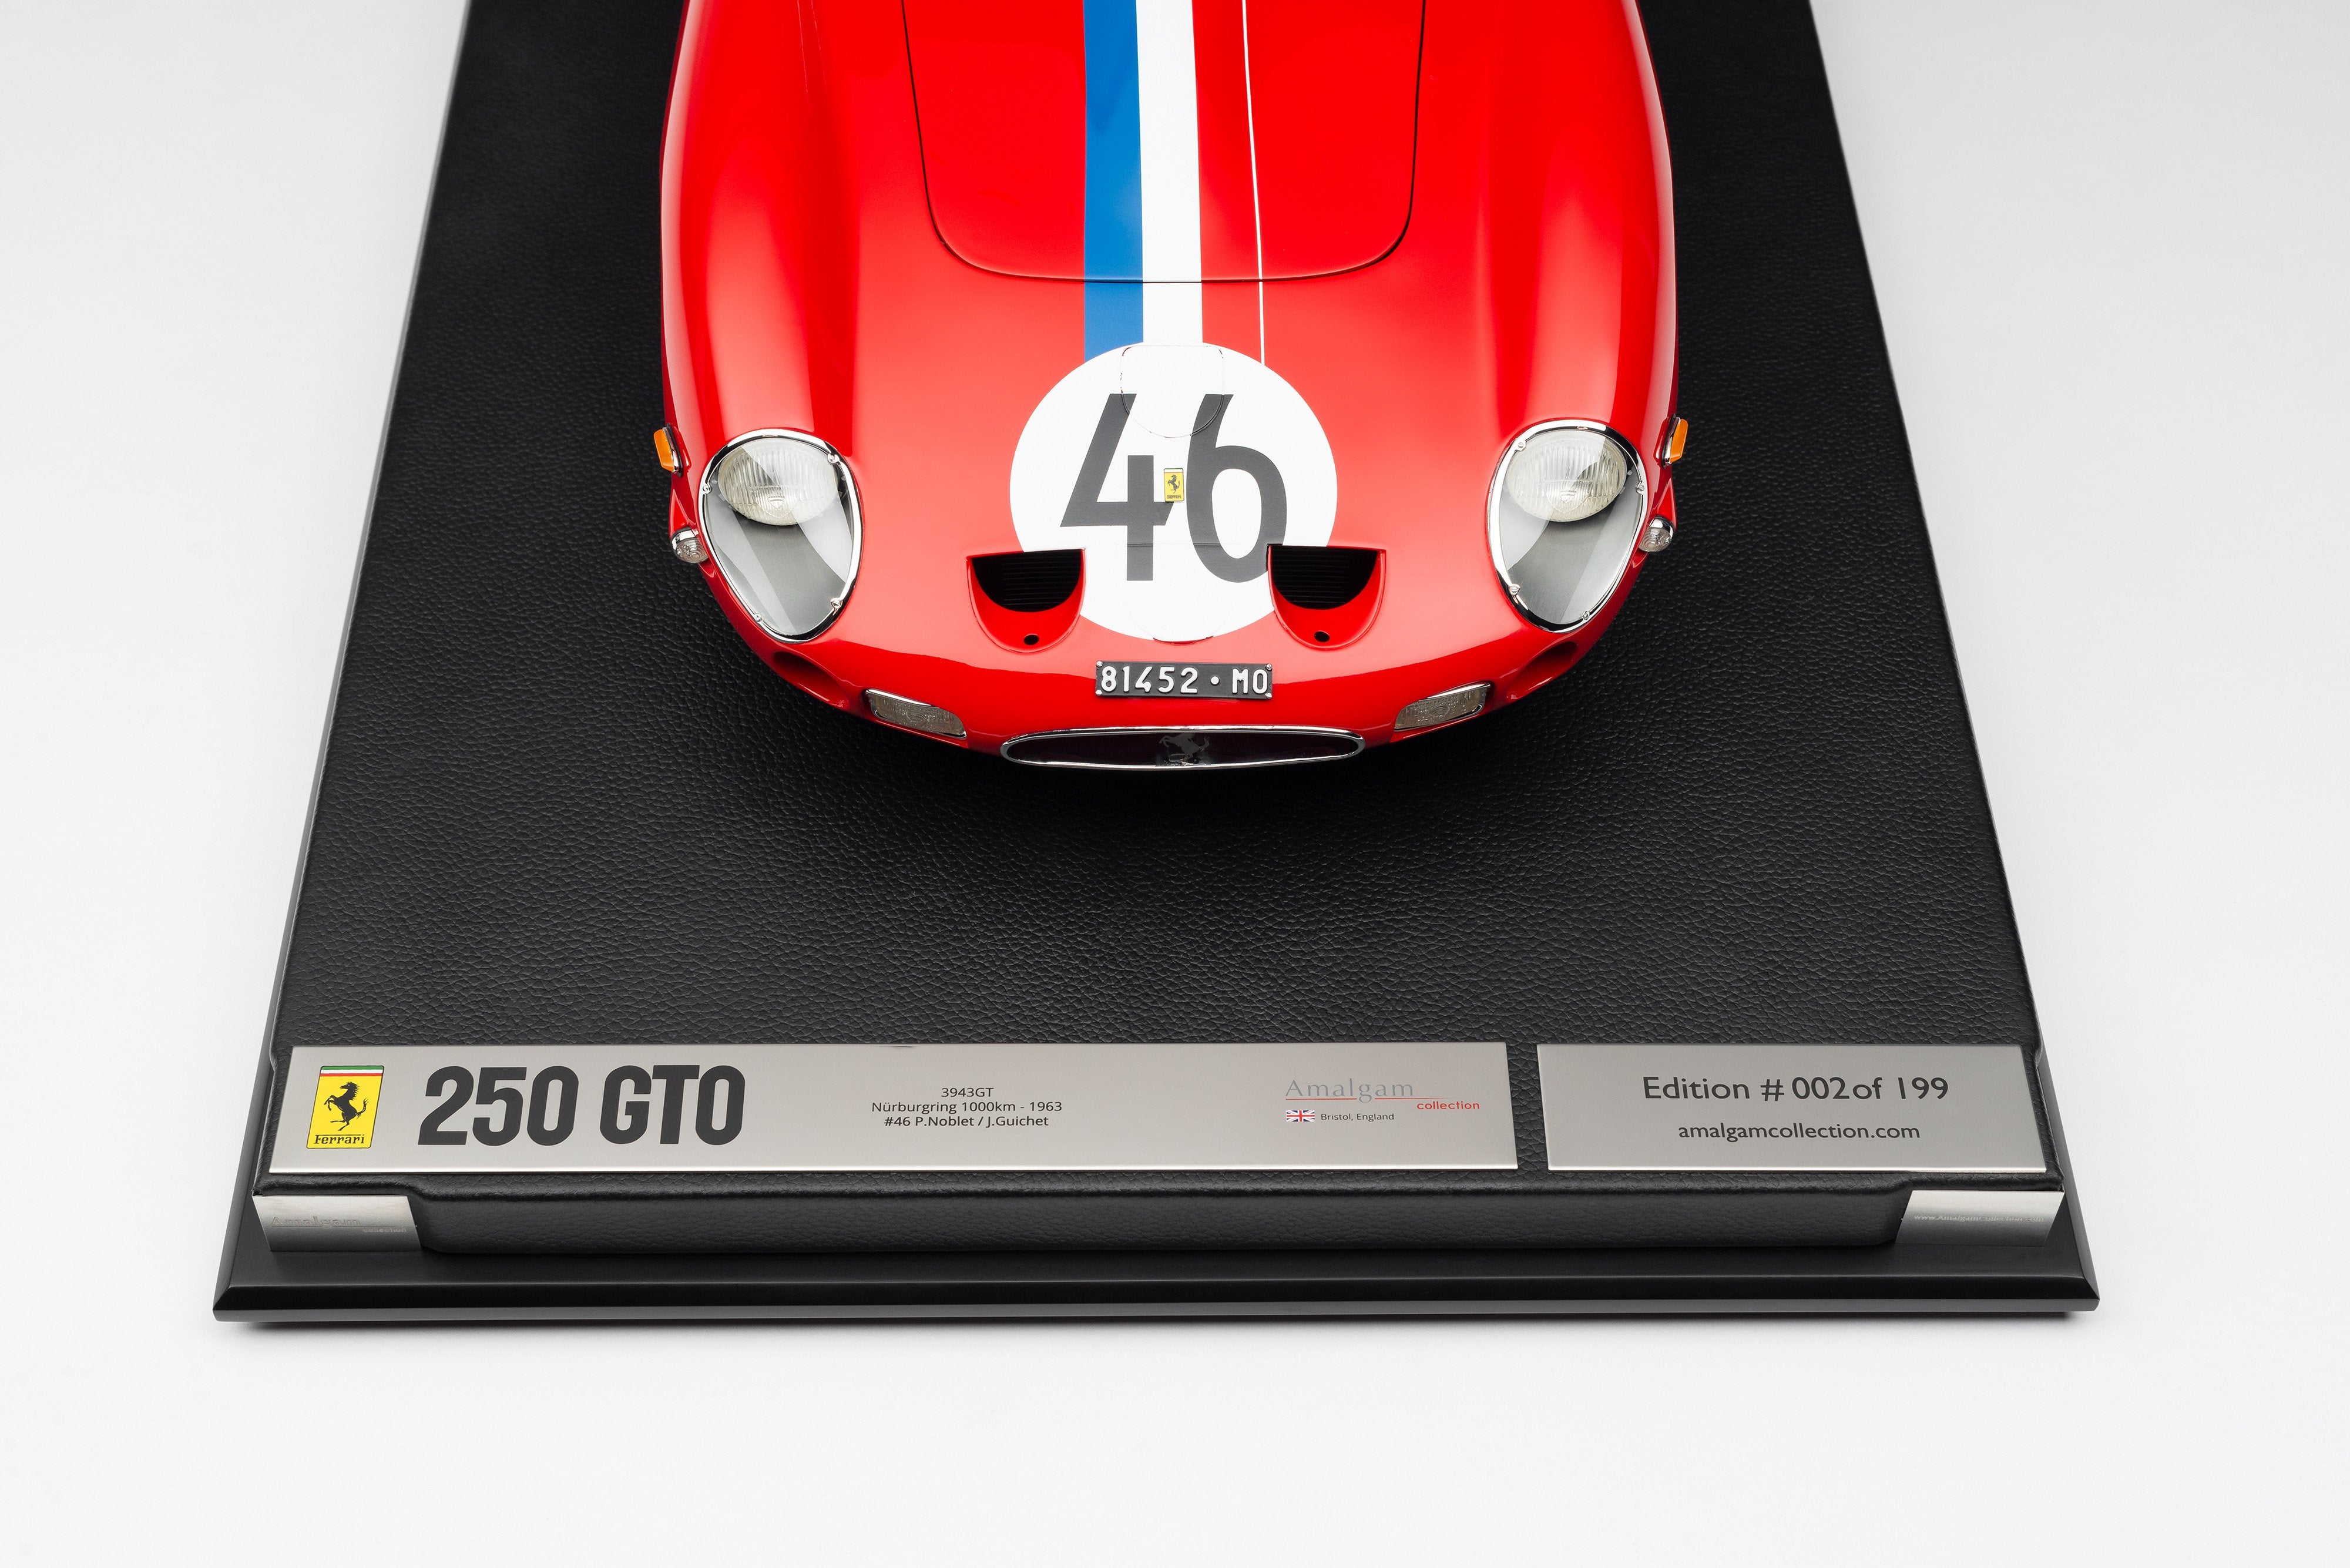 Ferrari 250 GTO - 3943GT - 1963 Nürburgring 1000km Class Winner 